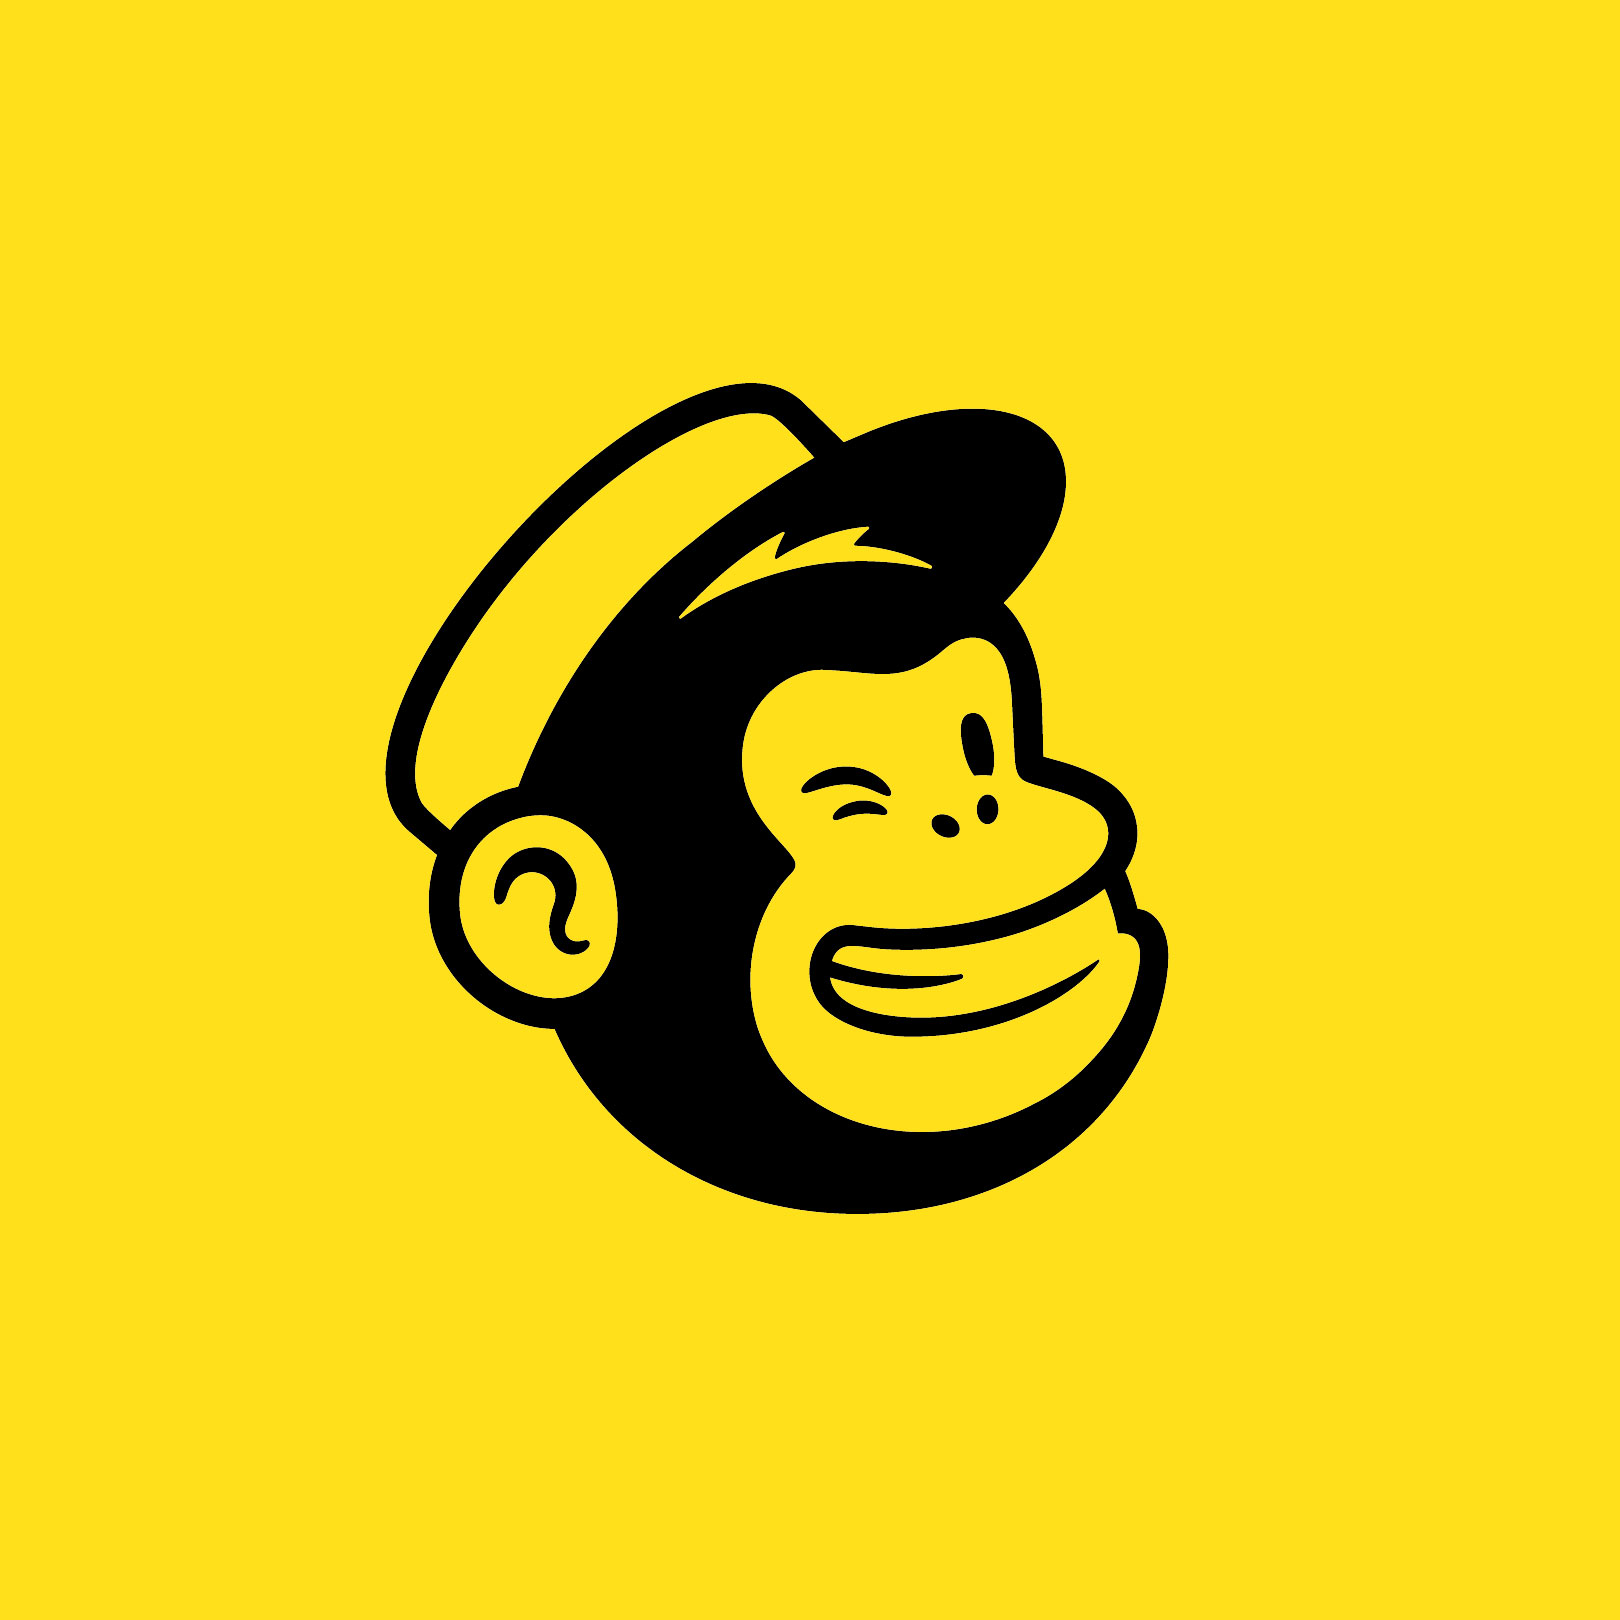 monkey winking in black on yellow background